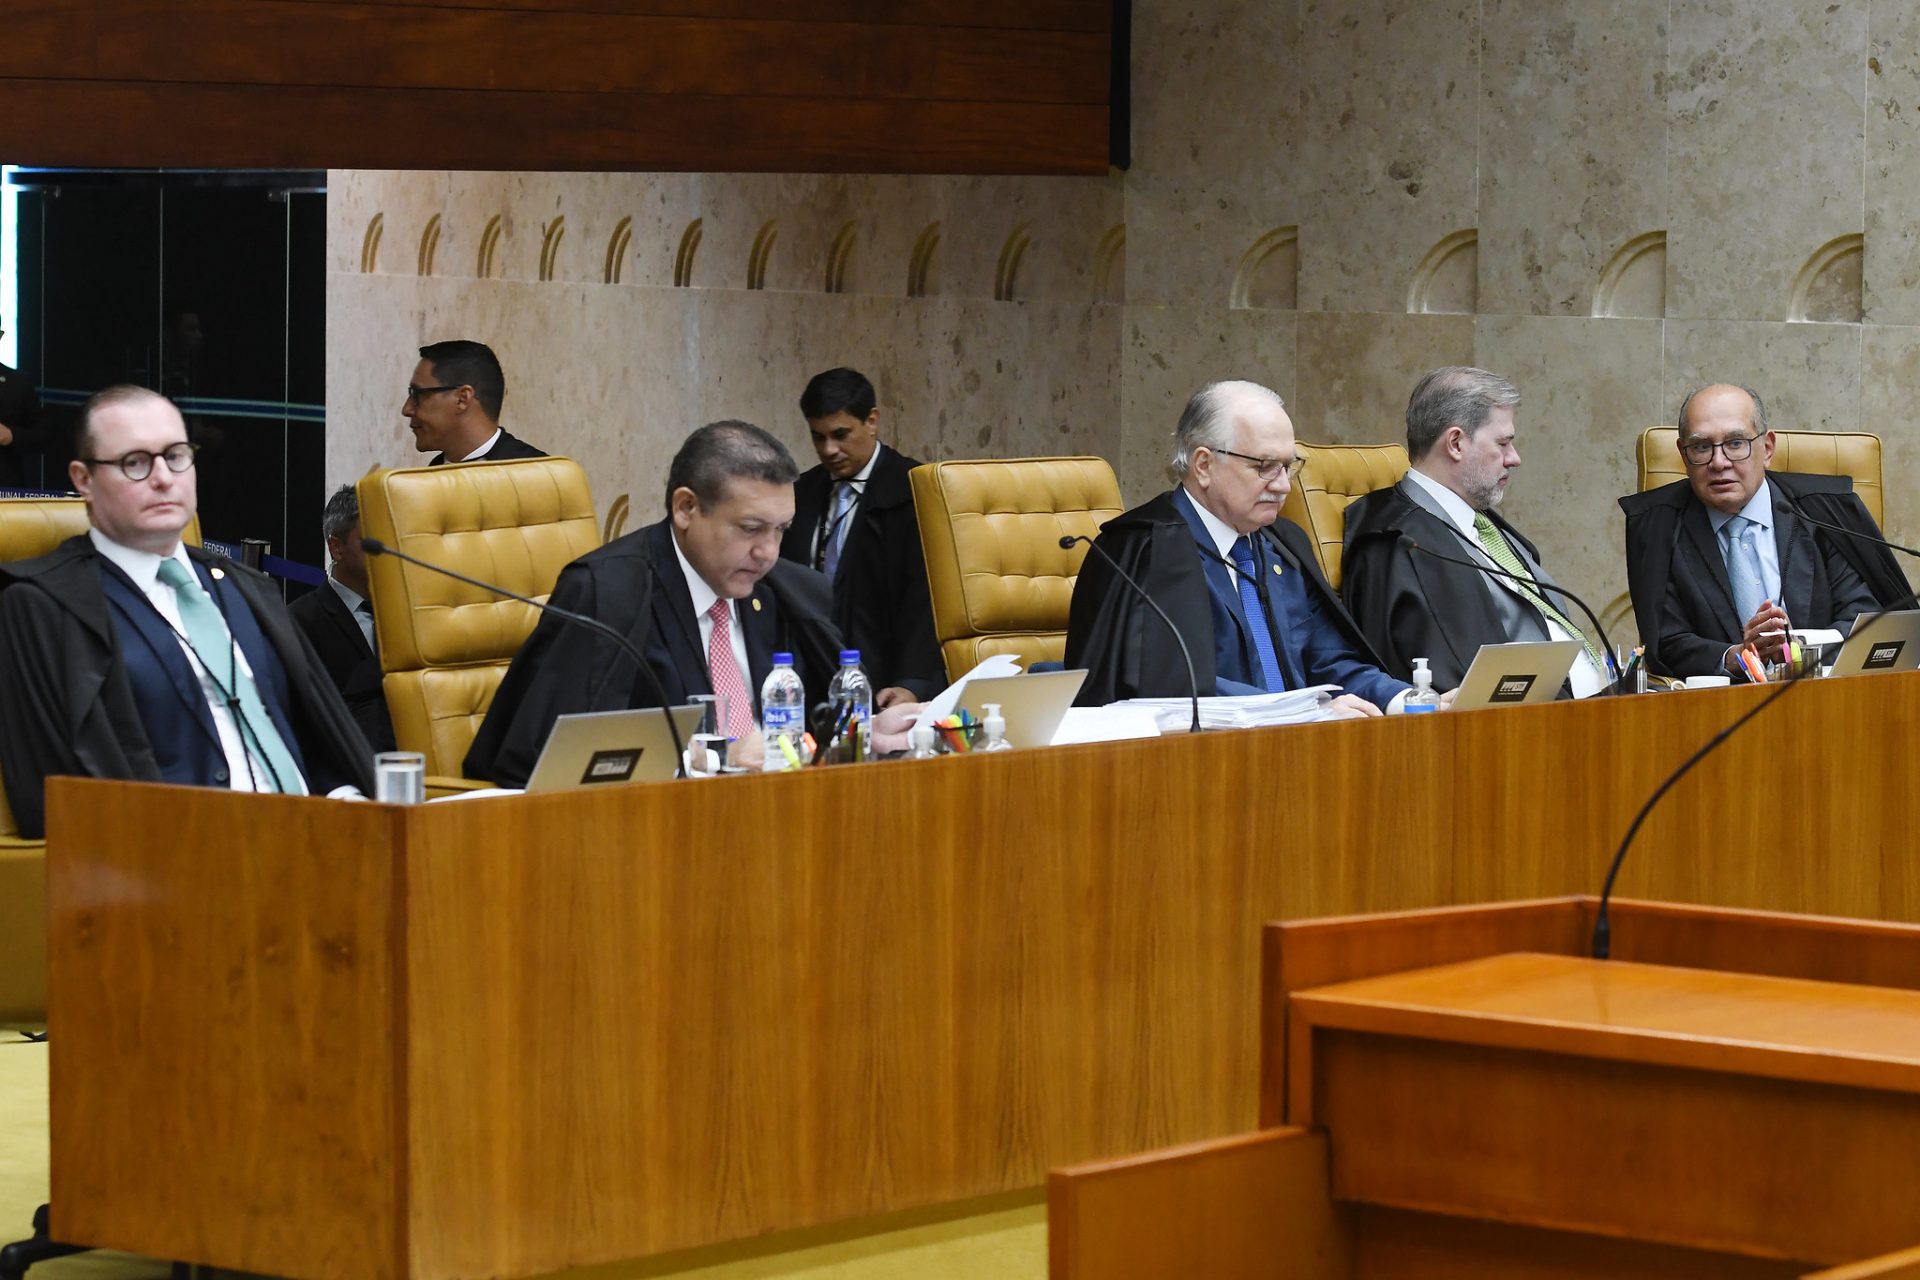 Ministros durante a sessão plenária do STF - Foto: Carlos Moura/SCO/STF